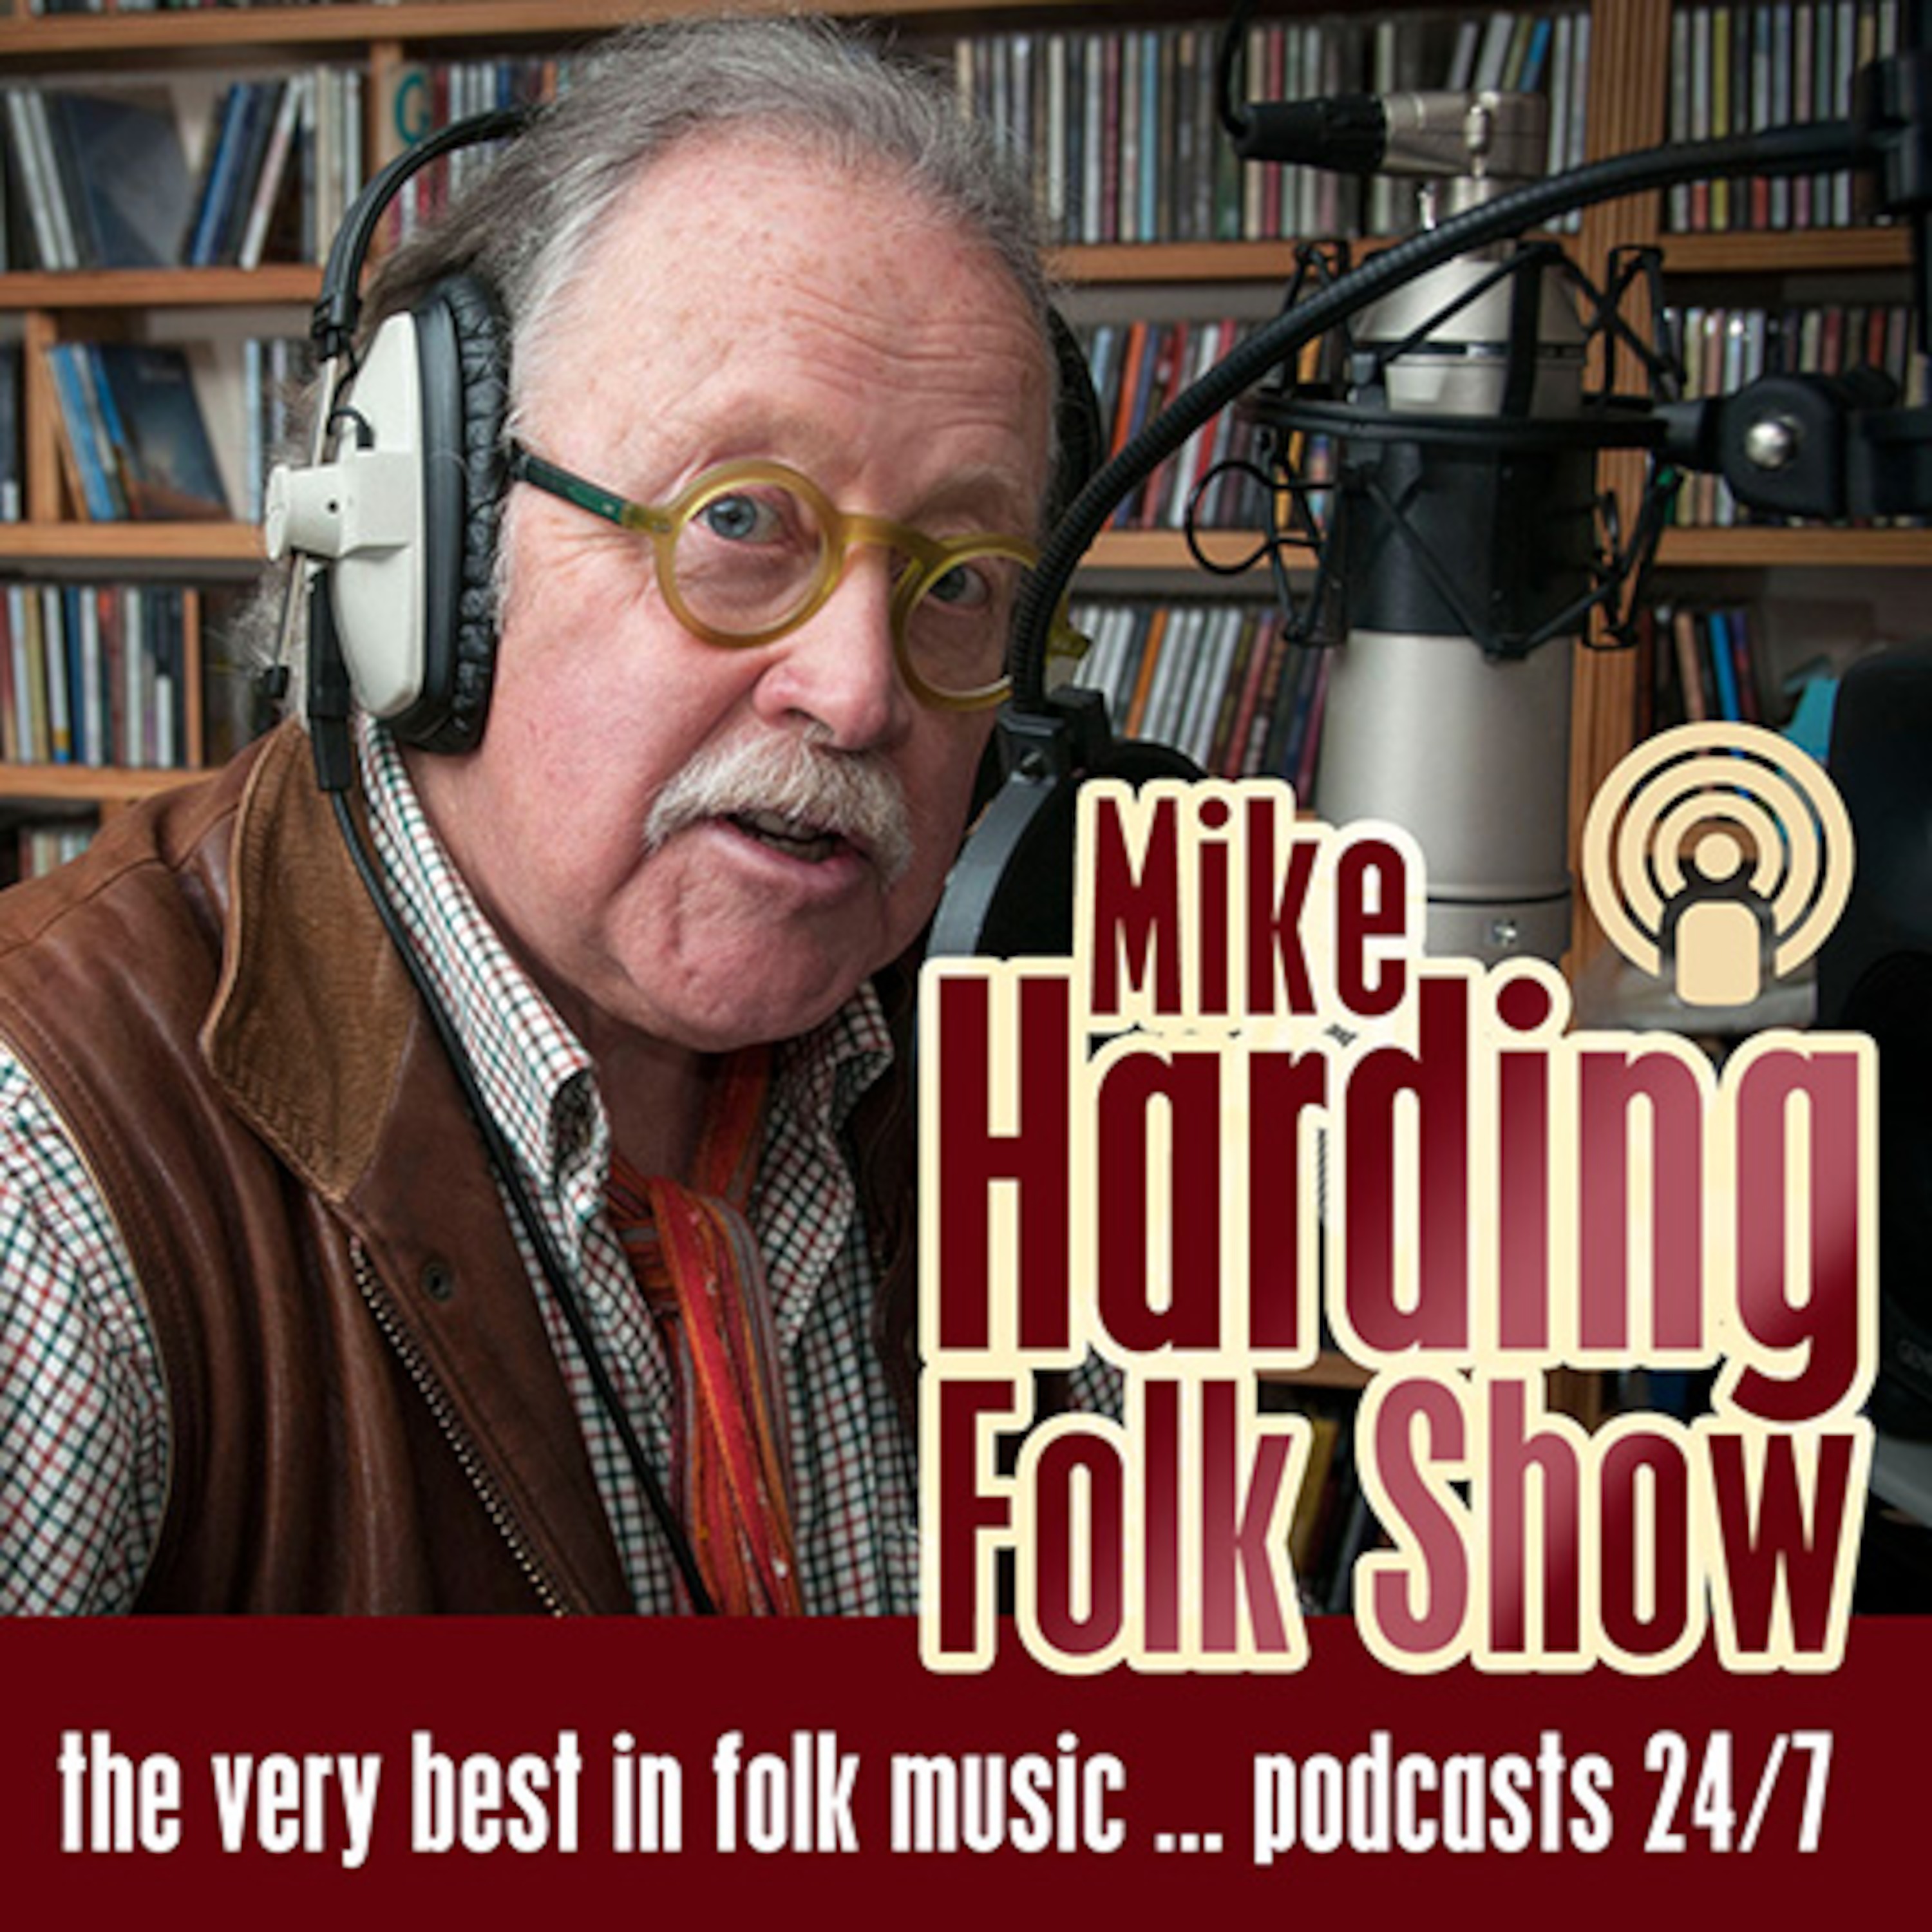 Mike Harding Folk Show 130